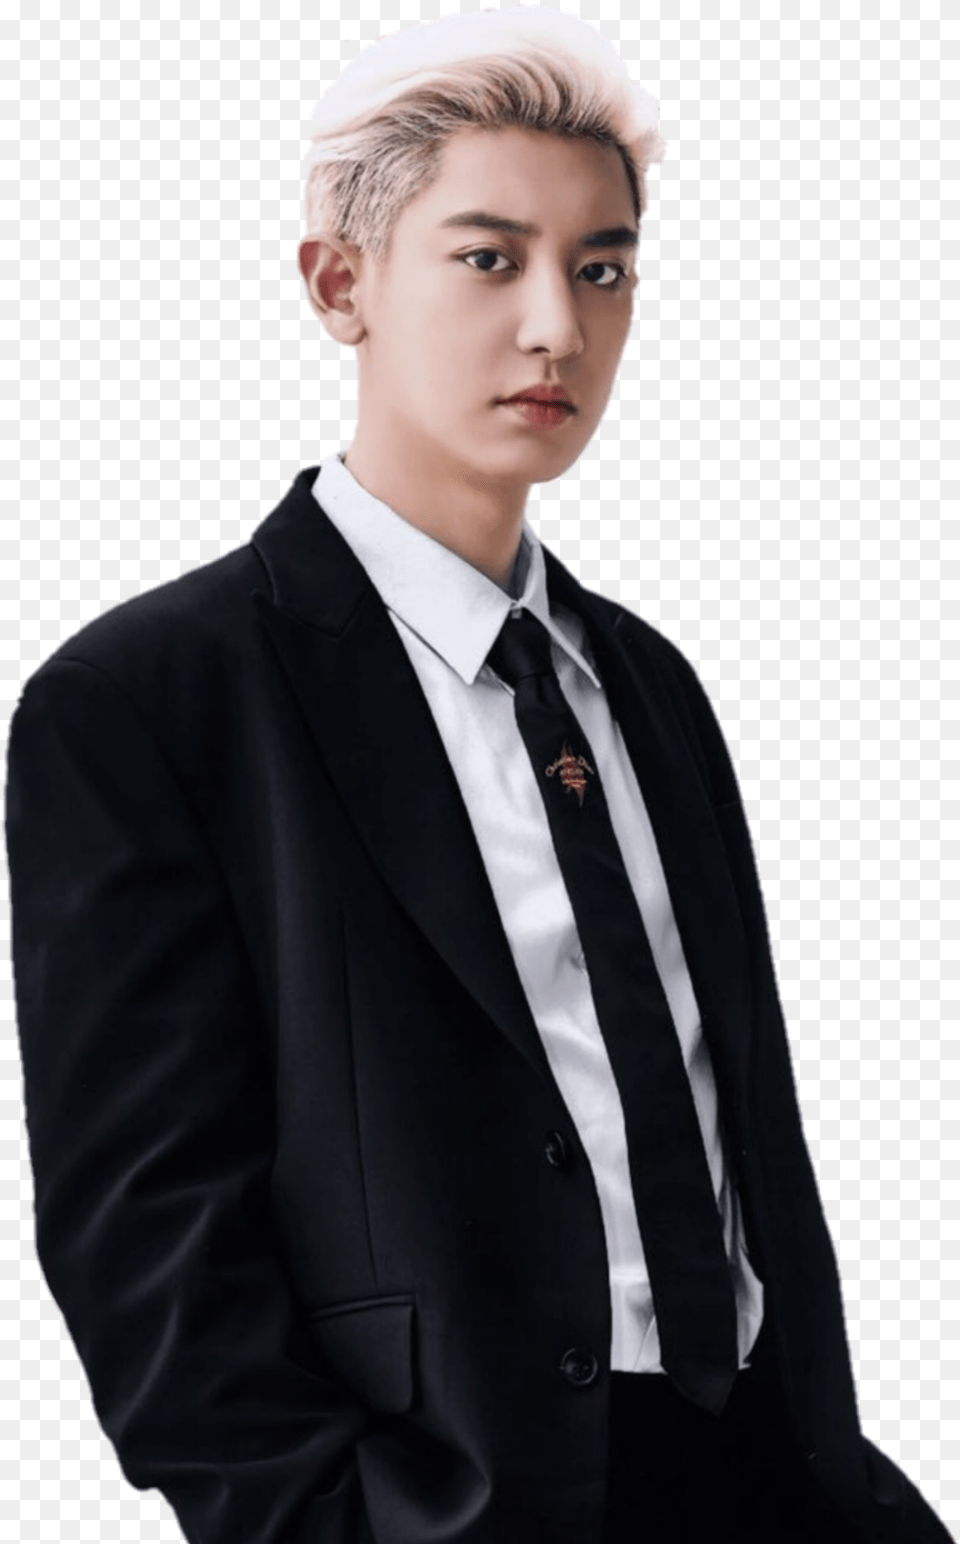 Chanyeol Exo Wattpad Exo Kpop Boys Policeman, Accessories, Tie, Suit, Jacket Png Image